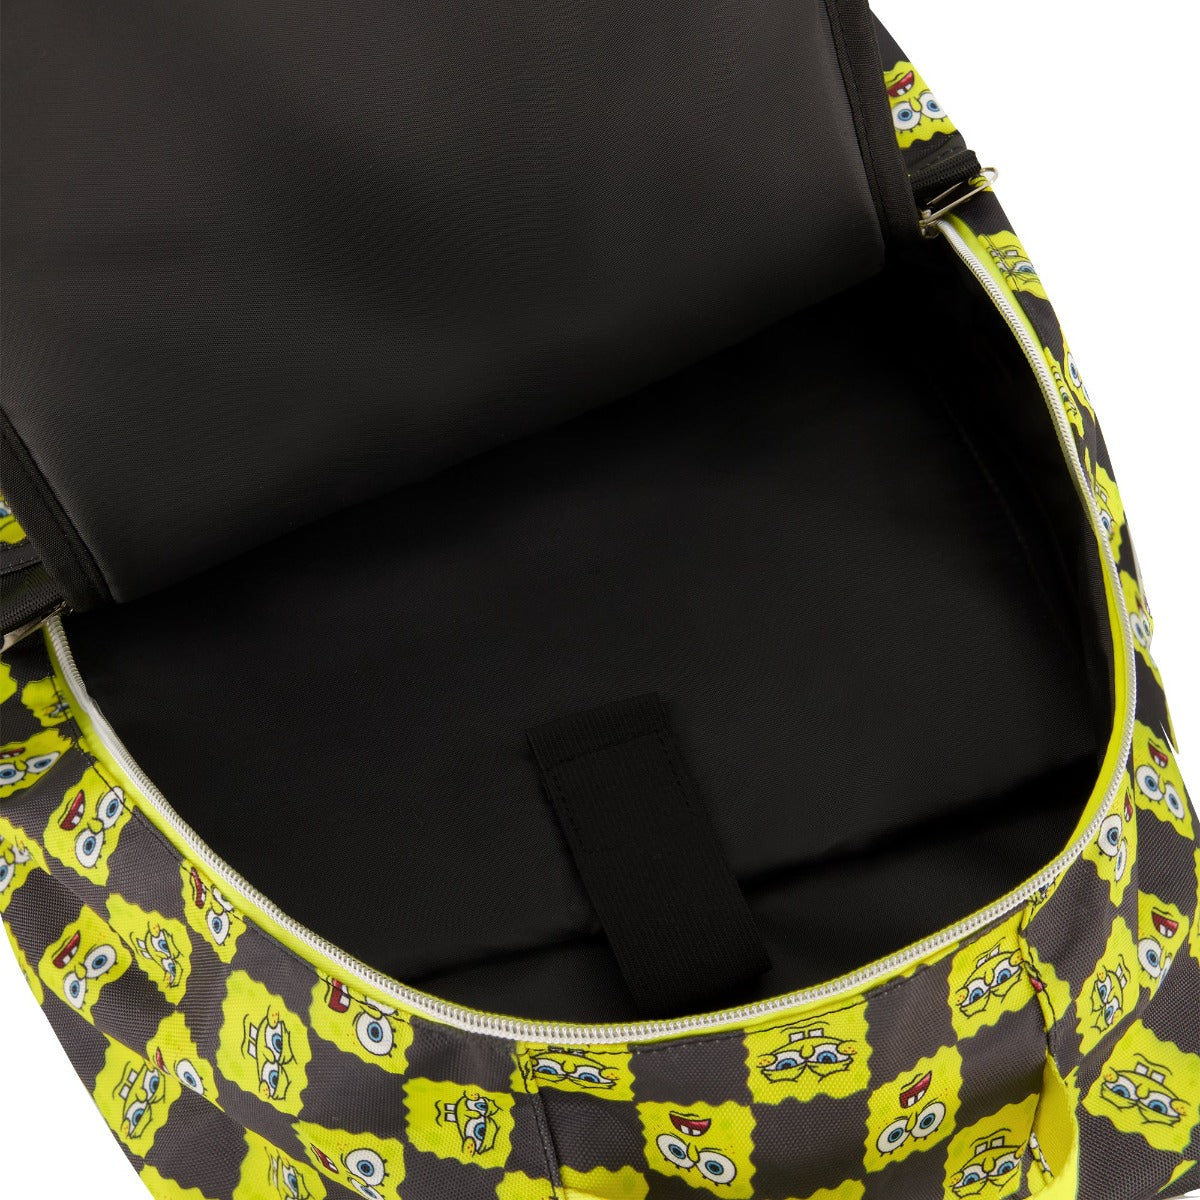 Yellow and black checkered Spongebob Squarepants big face backpack - best durable backpacks